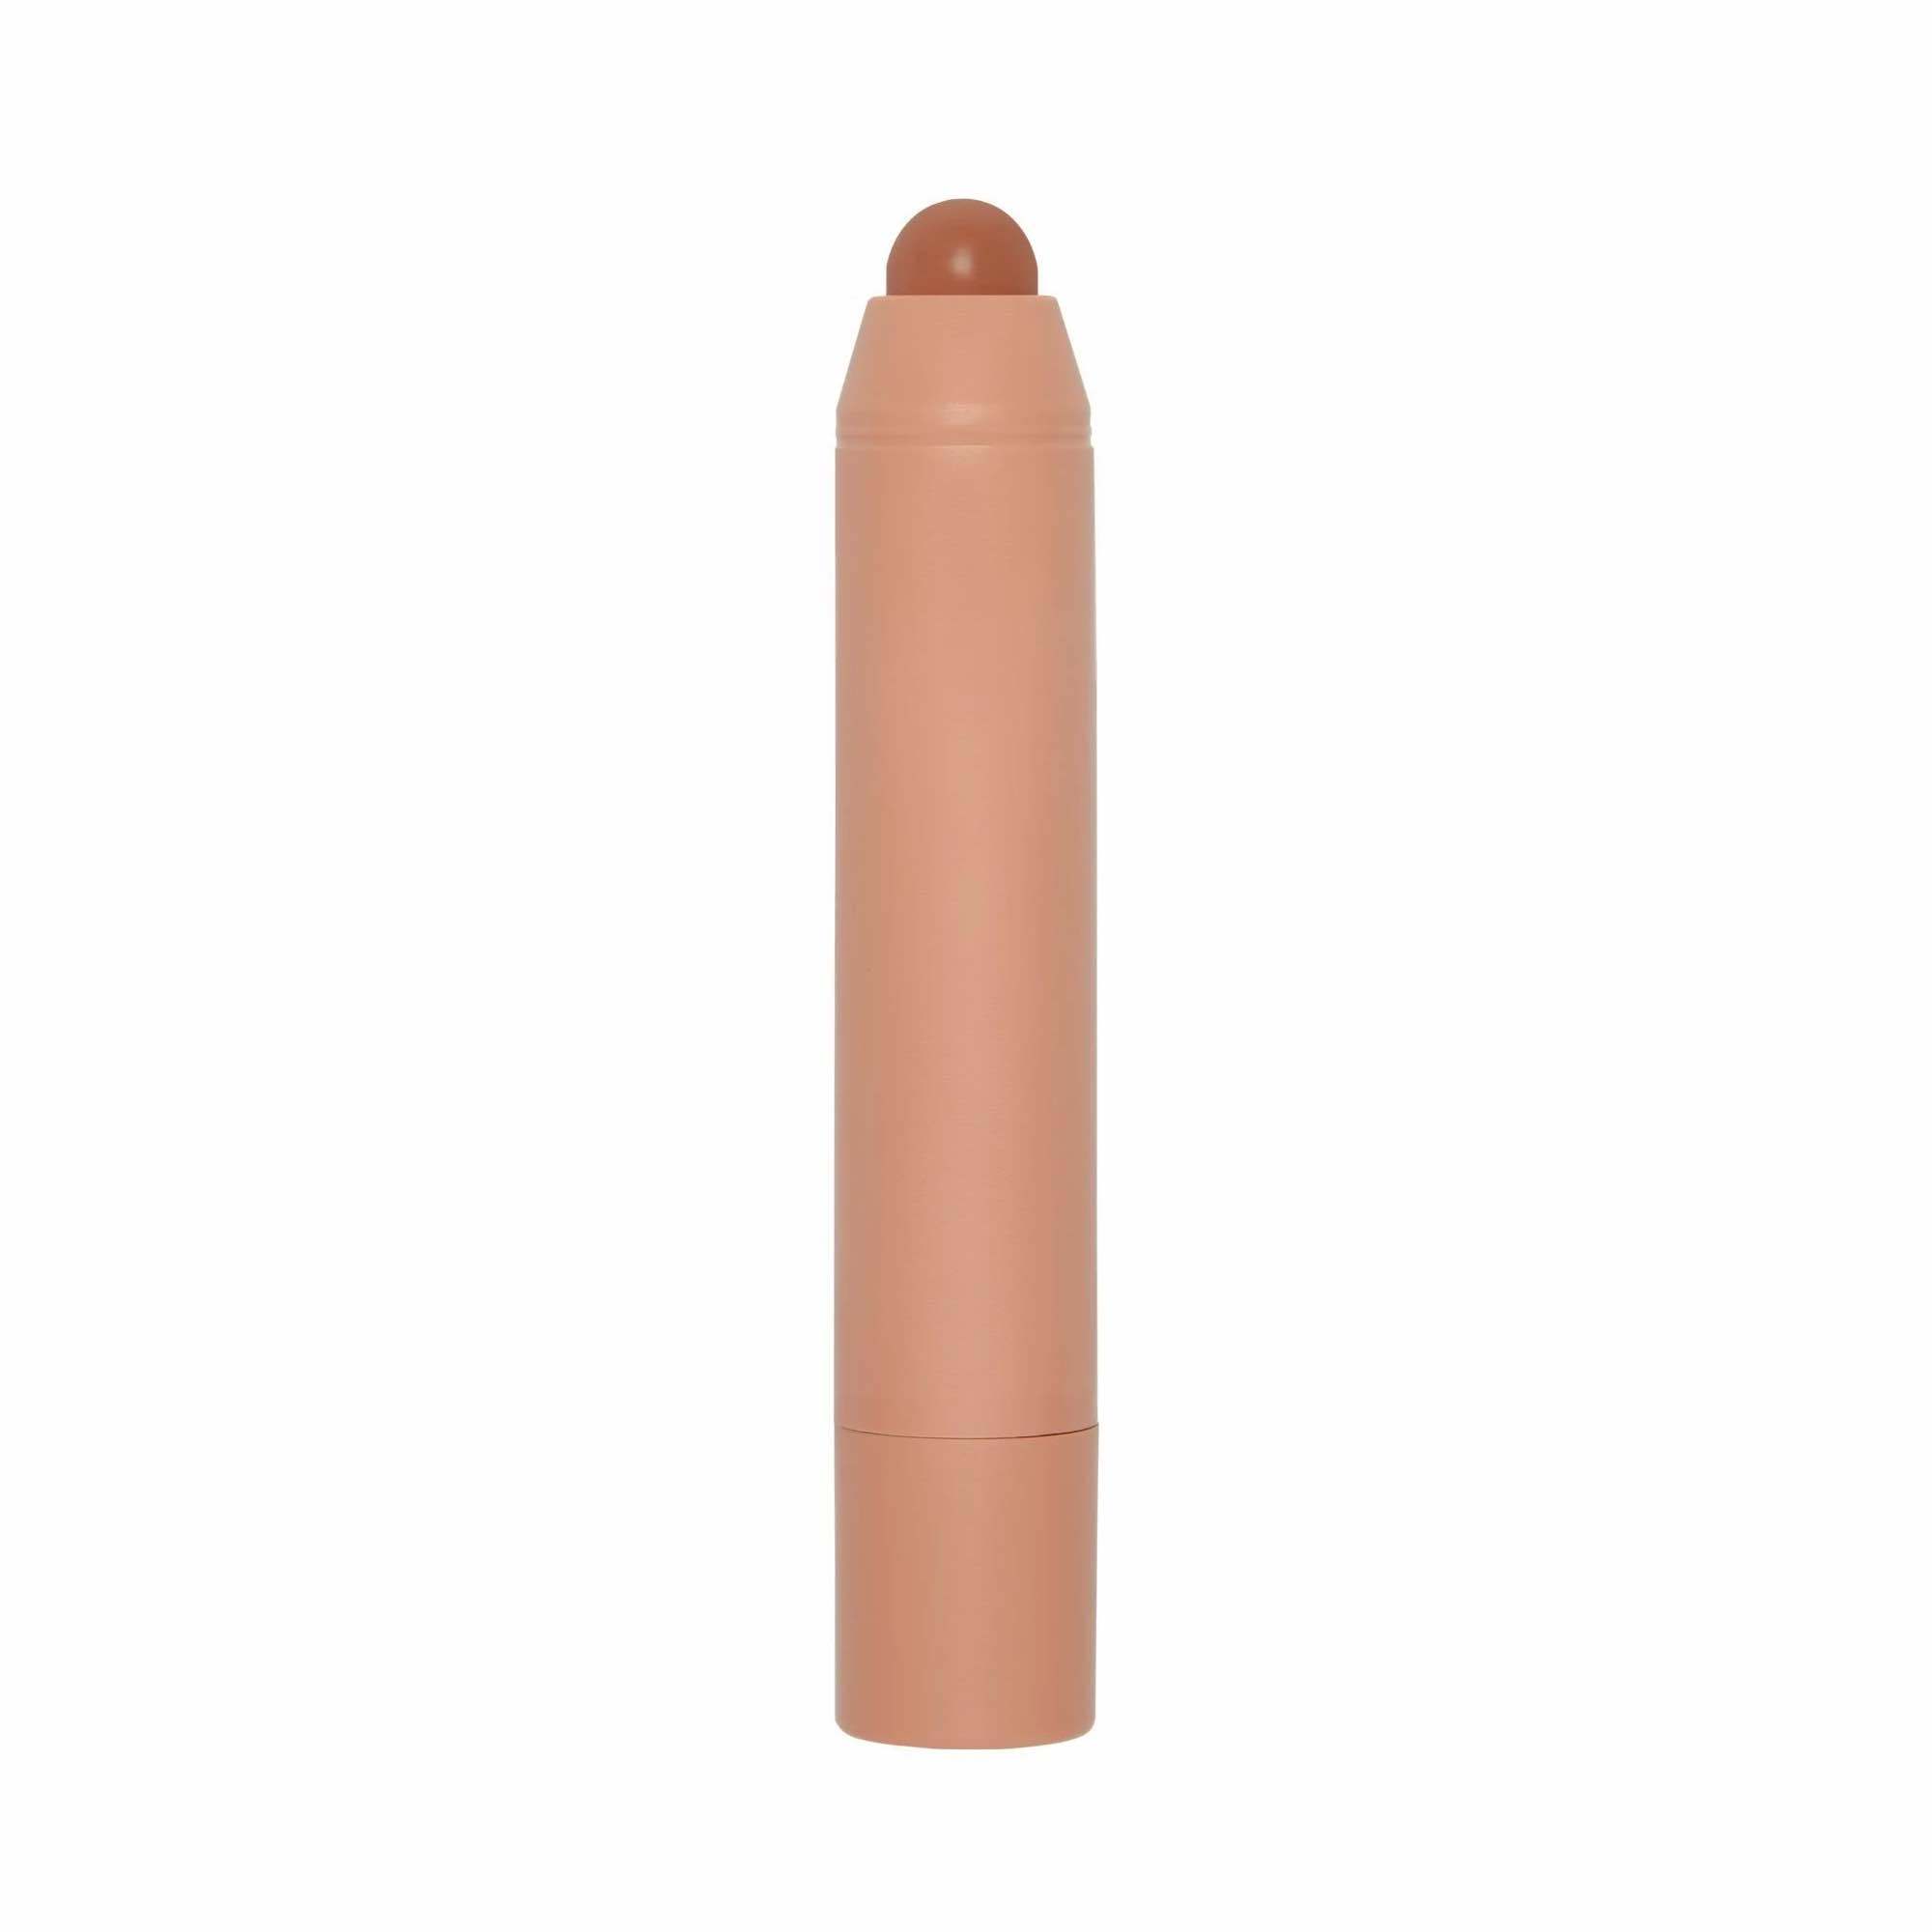 KKW Beauty Creme Contour Stick Light/Medium